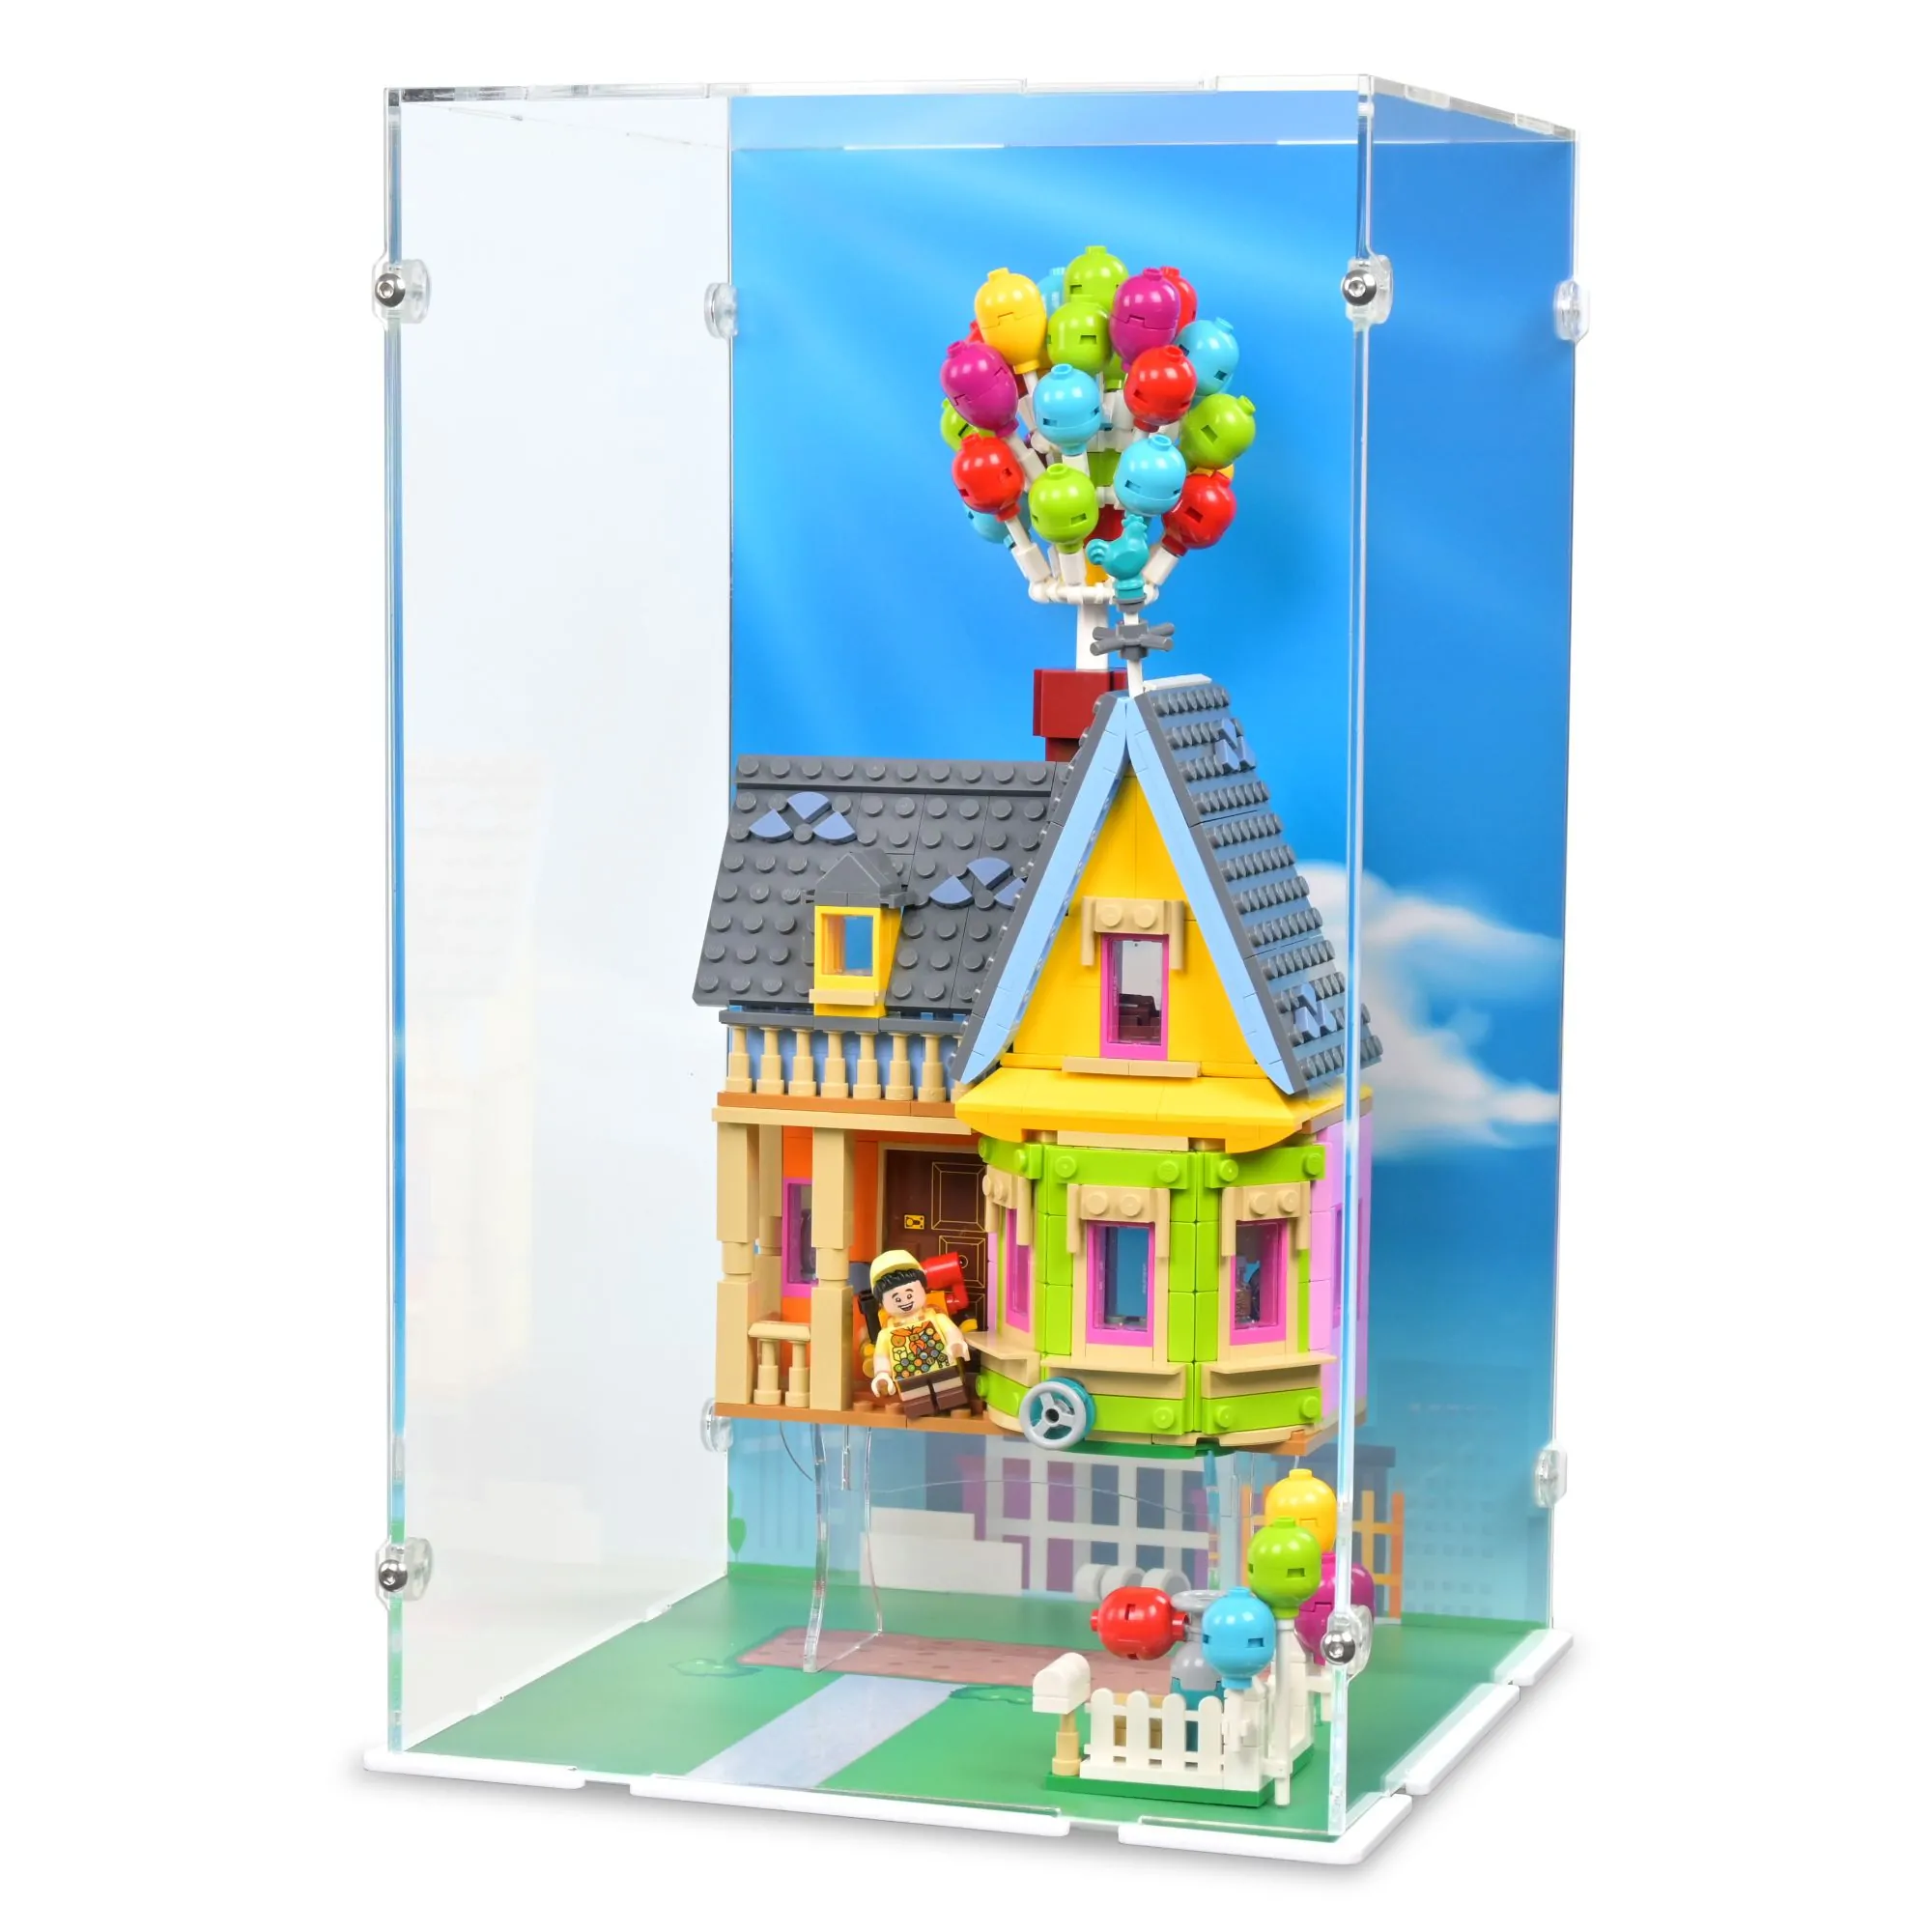 LEGO MOC Modular Up House - Modification of Set 43217 by Brick